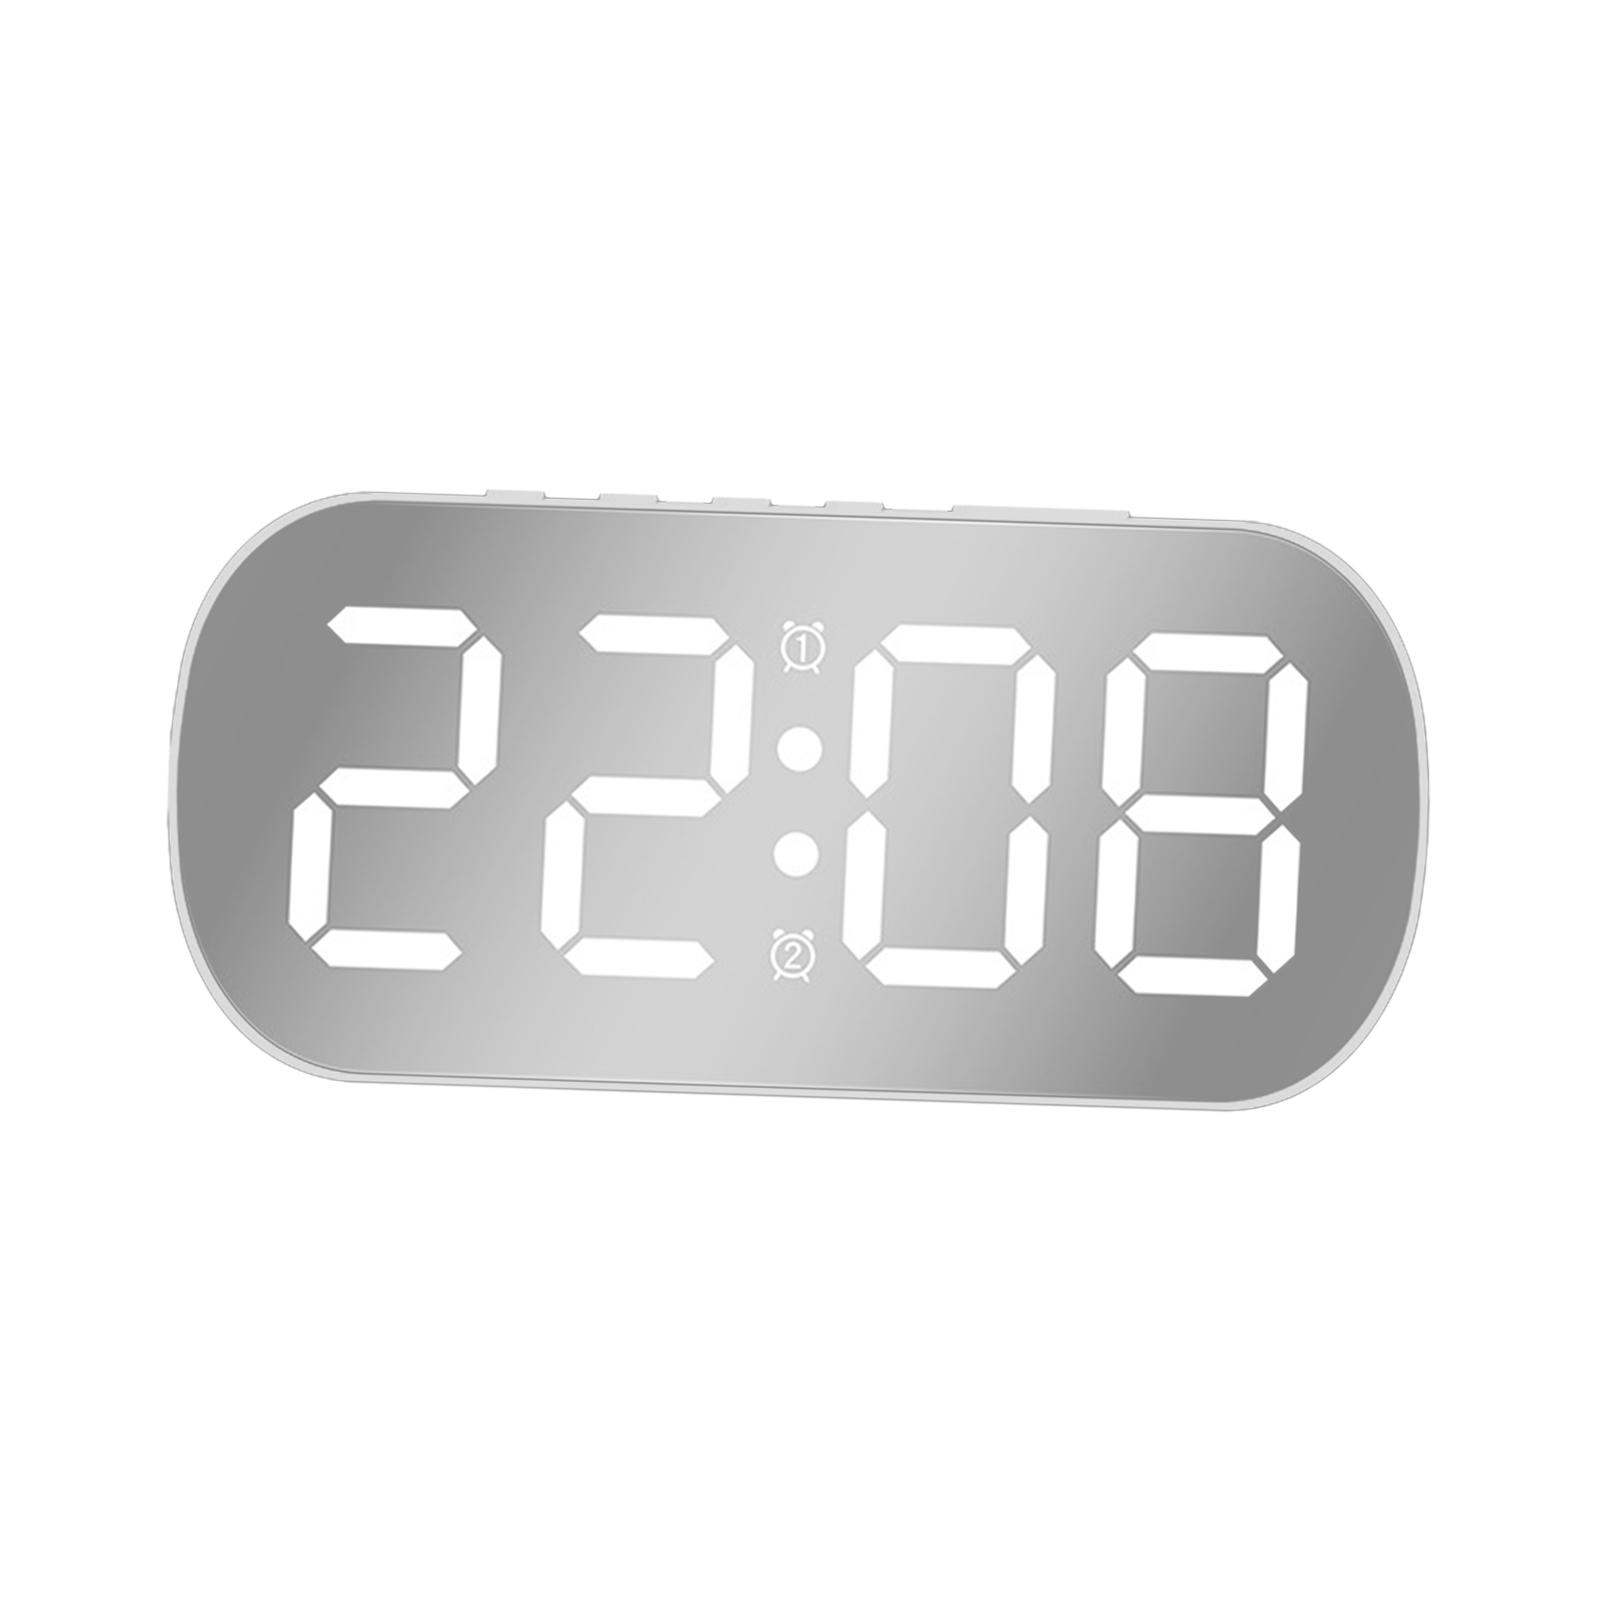 Digital Alarm Clock Mirrored Large Display 5 Adjustable Brightness LED Clock White White LED